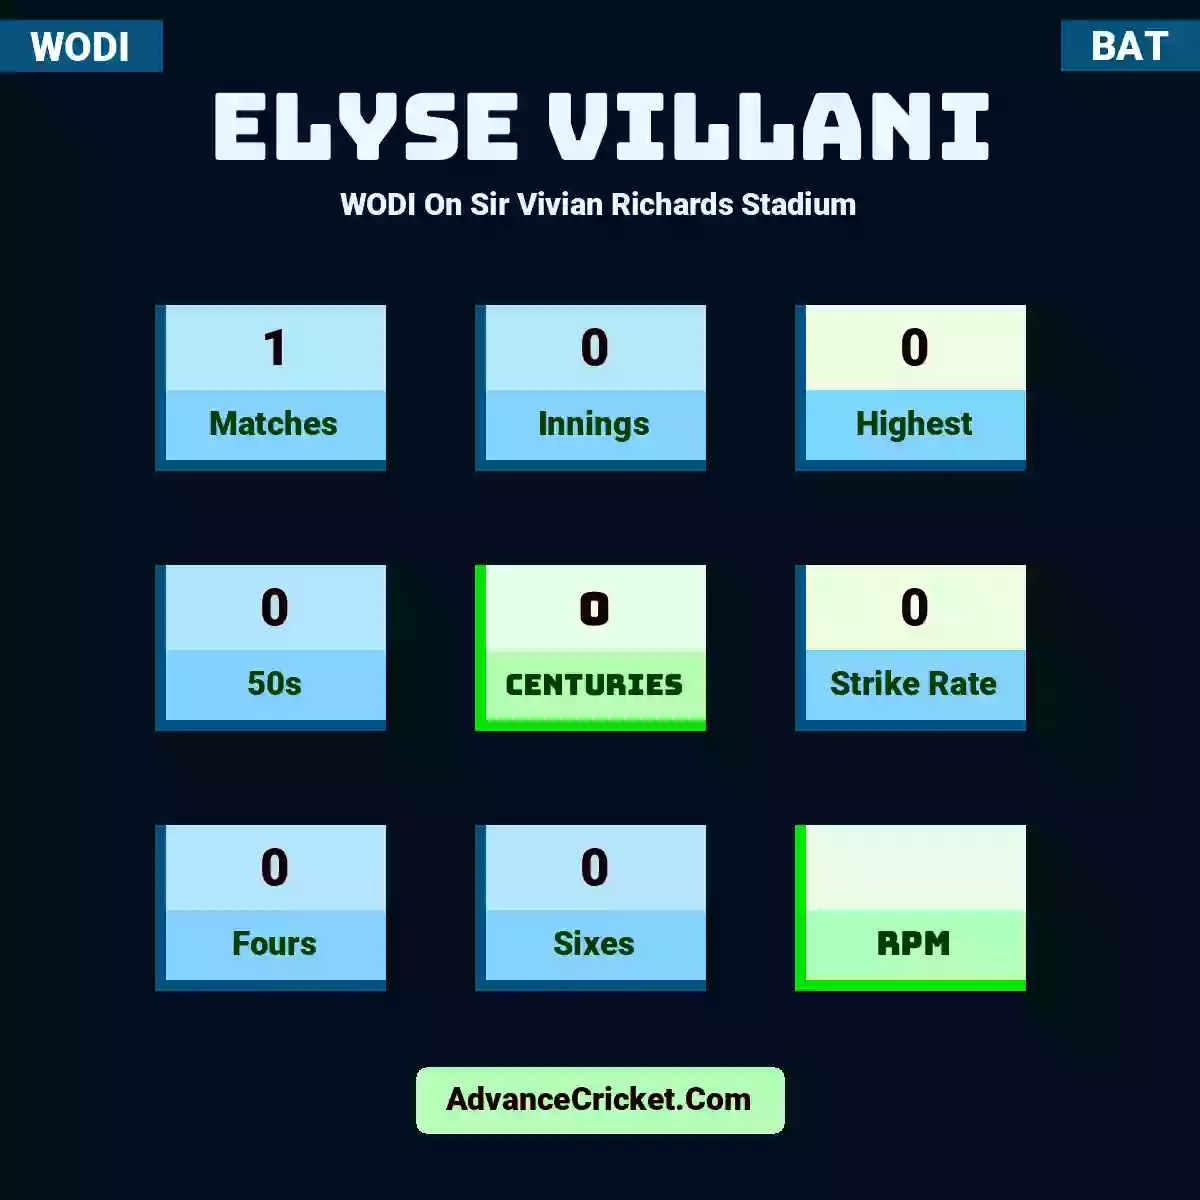 Elyse Villani WODI  On Sir Vivian Richards Stadium, Elyse Villani played 1 matches, scored 0 runs as highest, 0 half-centuries, and 0 centuries, with a strike rate of 0. E.Villani hit 0 fours and 0 sixes.